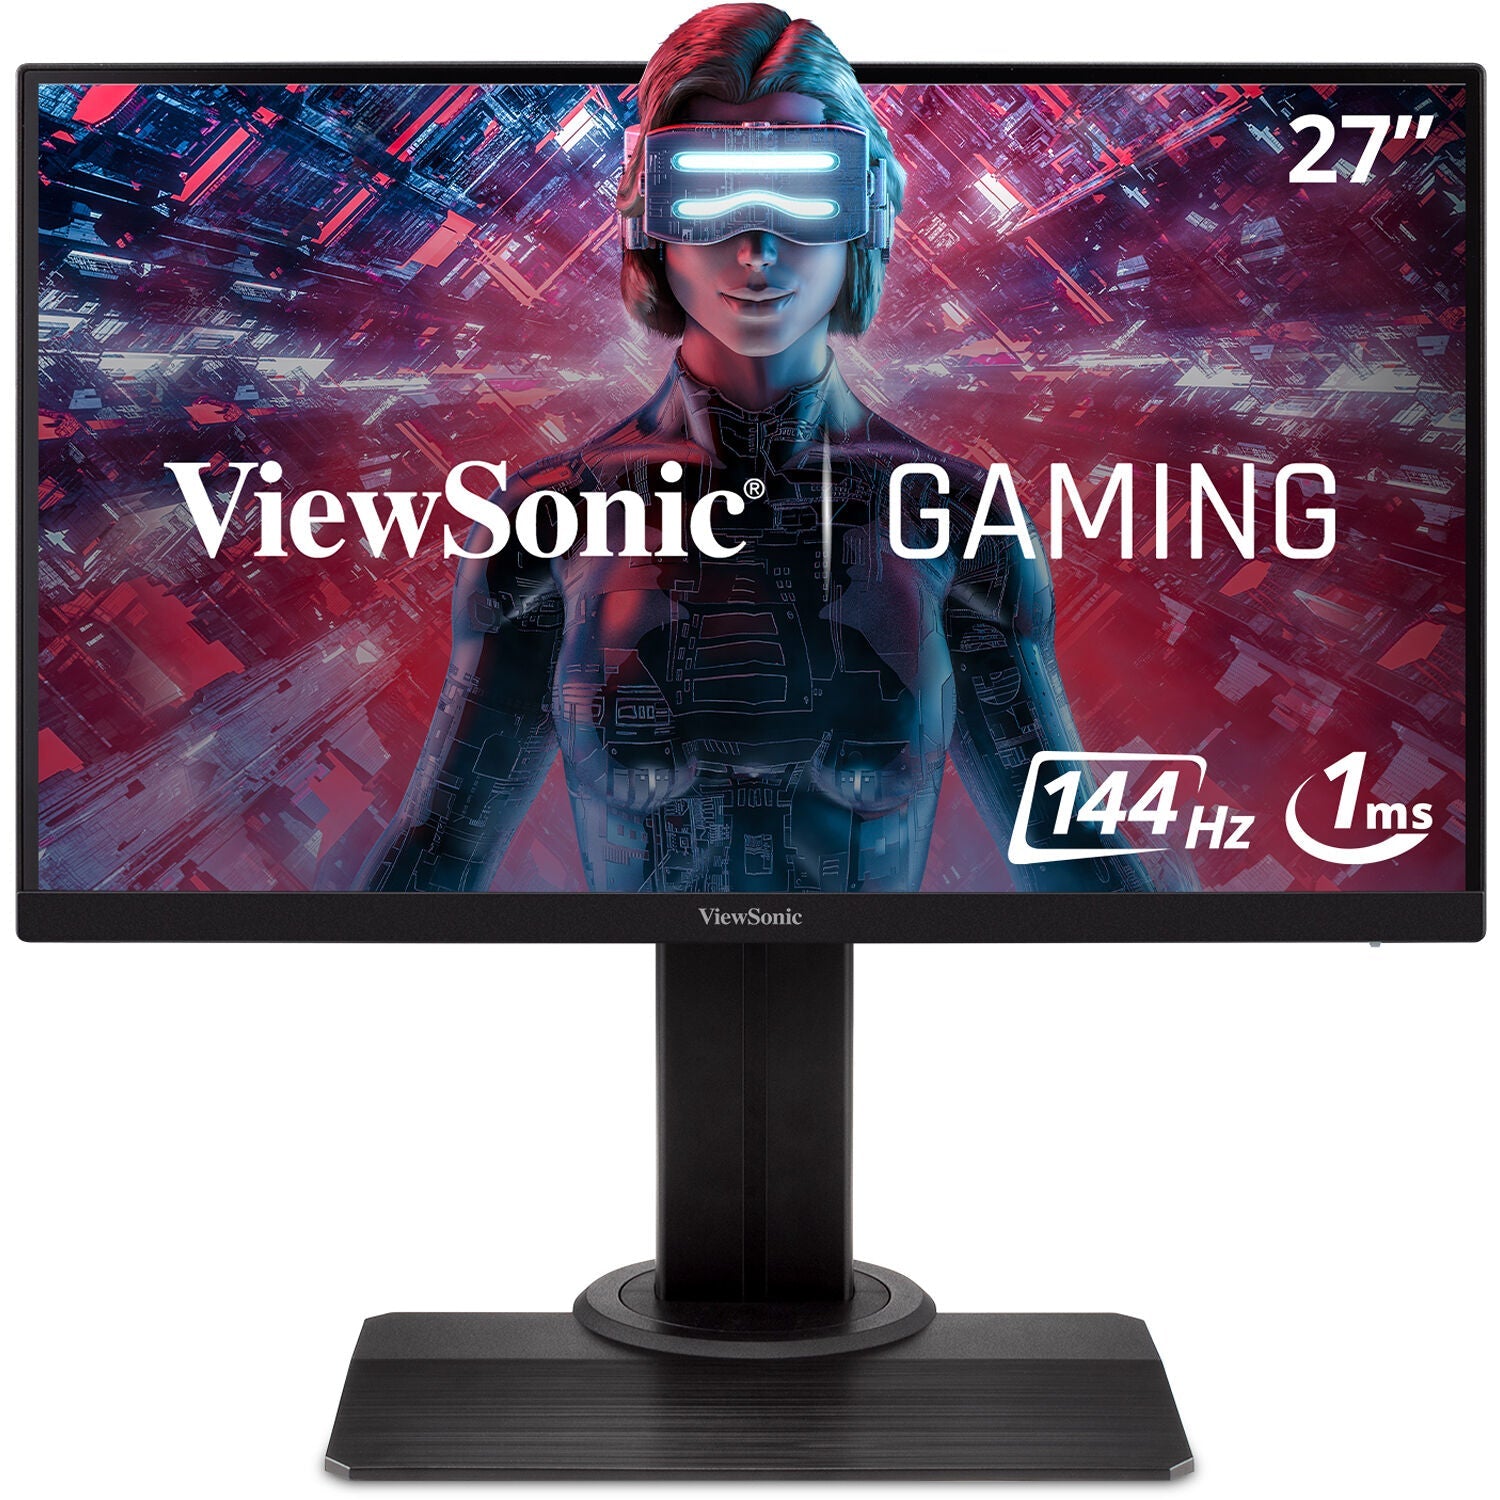 ViewSonic XG2705-2-S 27" 144Hz Gaming Monitor - Certified Refurbished